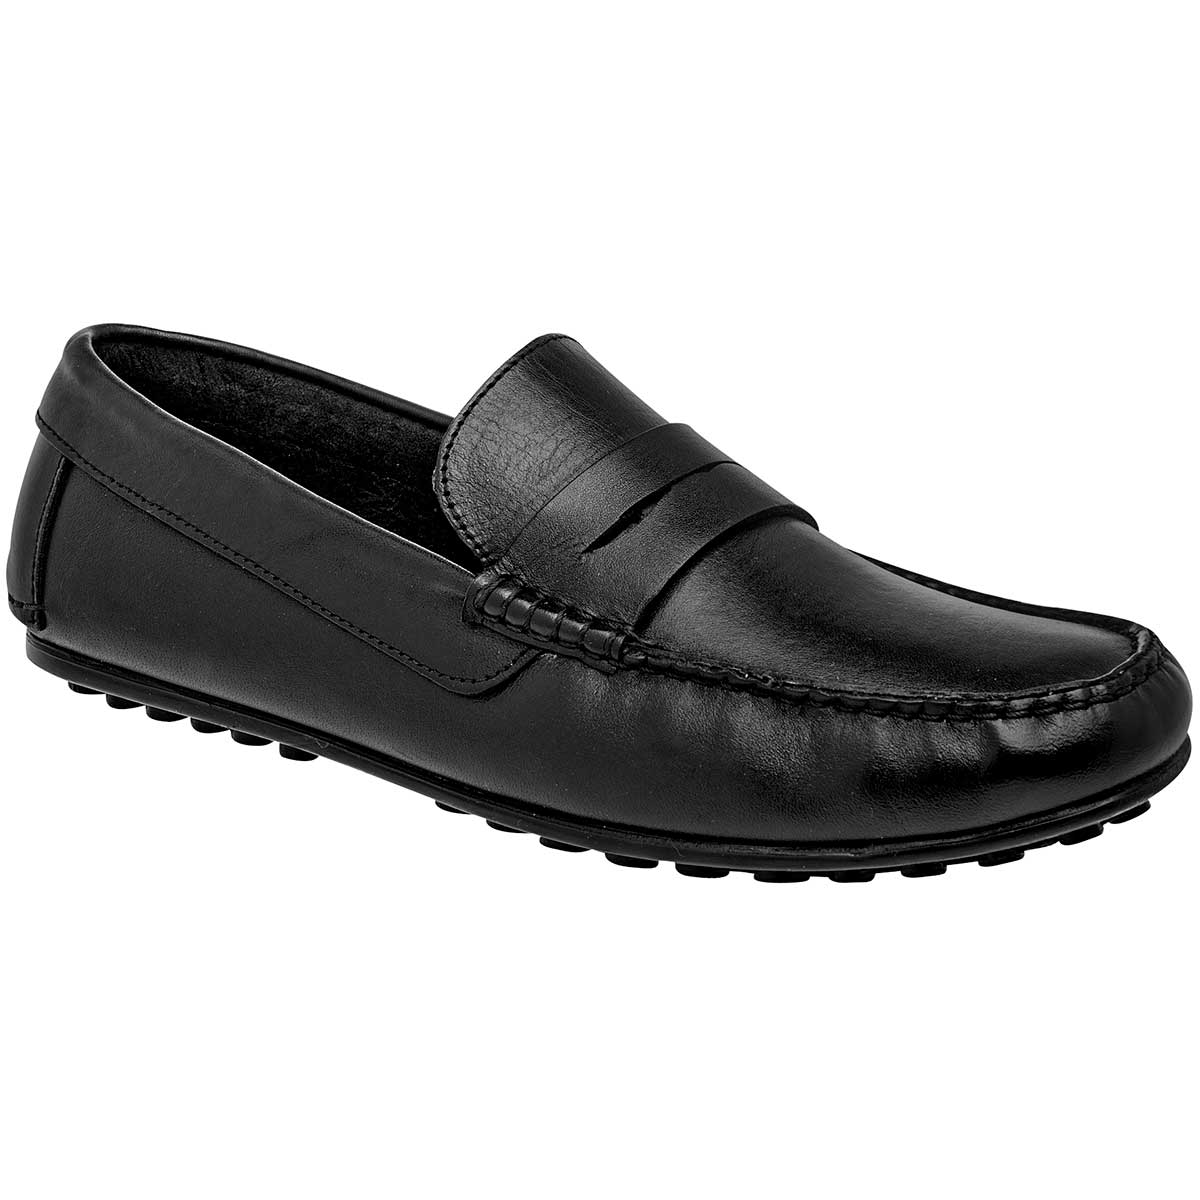 Pakar.com - Mayo: Regalos para mamá | Zapato casual para hombre cod-80896